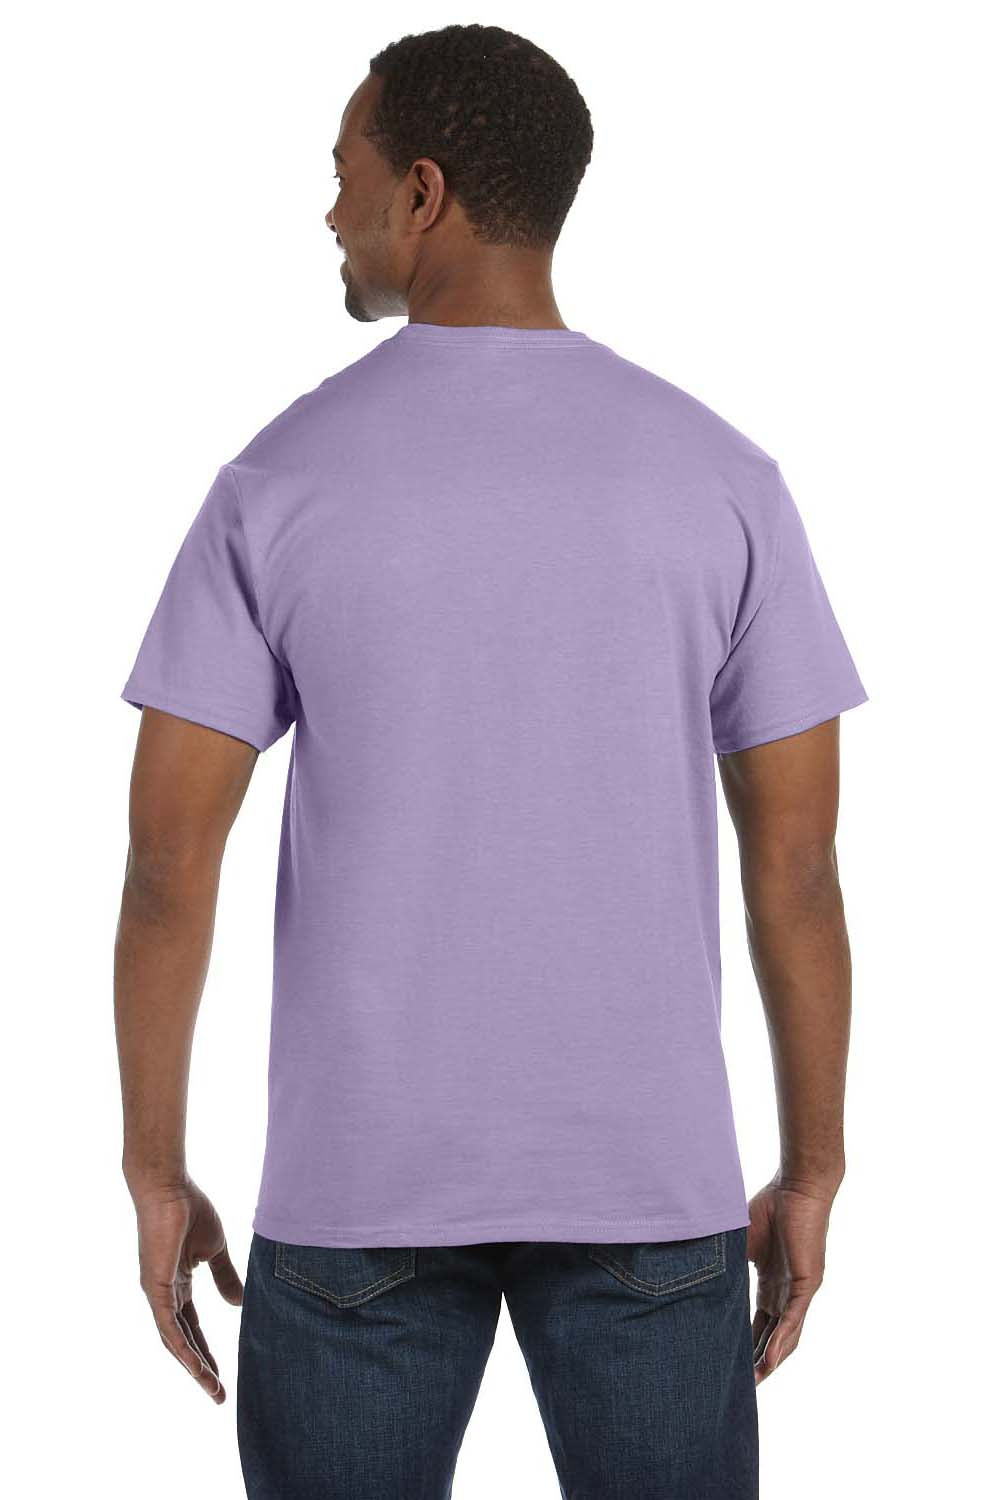 Hanes 5250T Mens ComfortSoft Short Sleeve Crewneck T-Shirt Lavender Purple Back